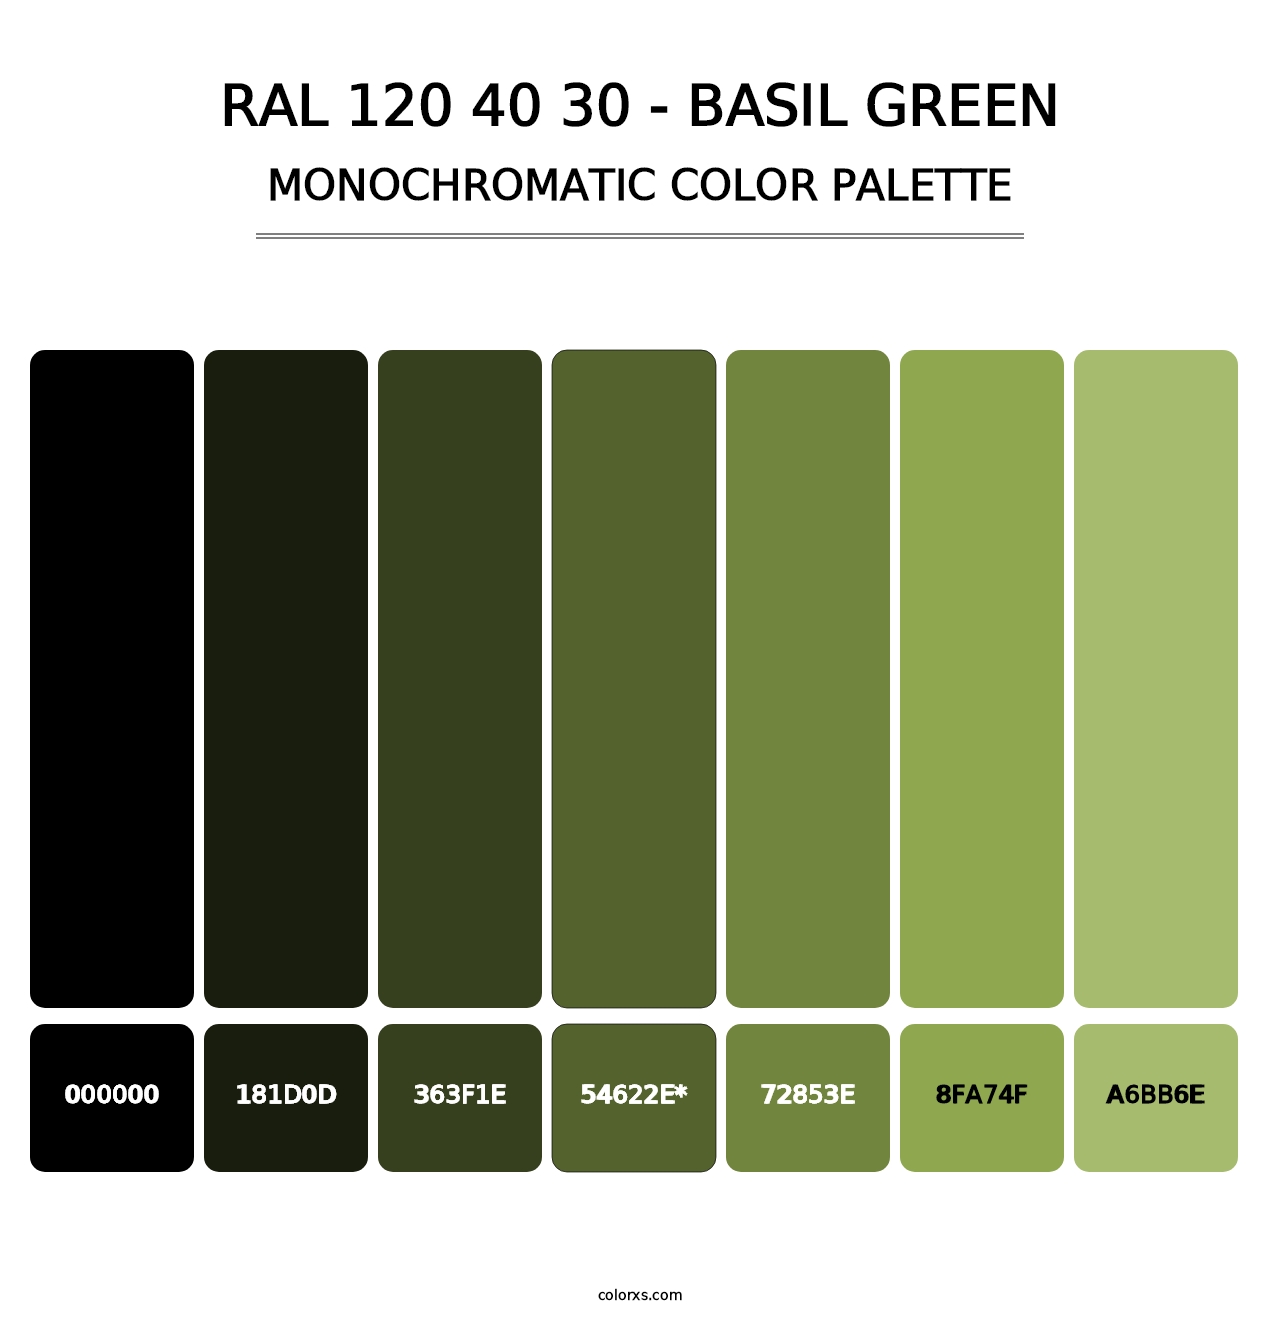 RAL 120 40 30 - Basil Green - Monochromatic Color Palette